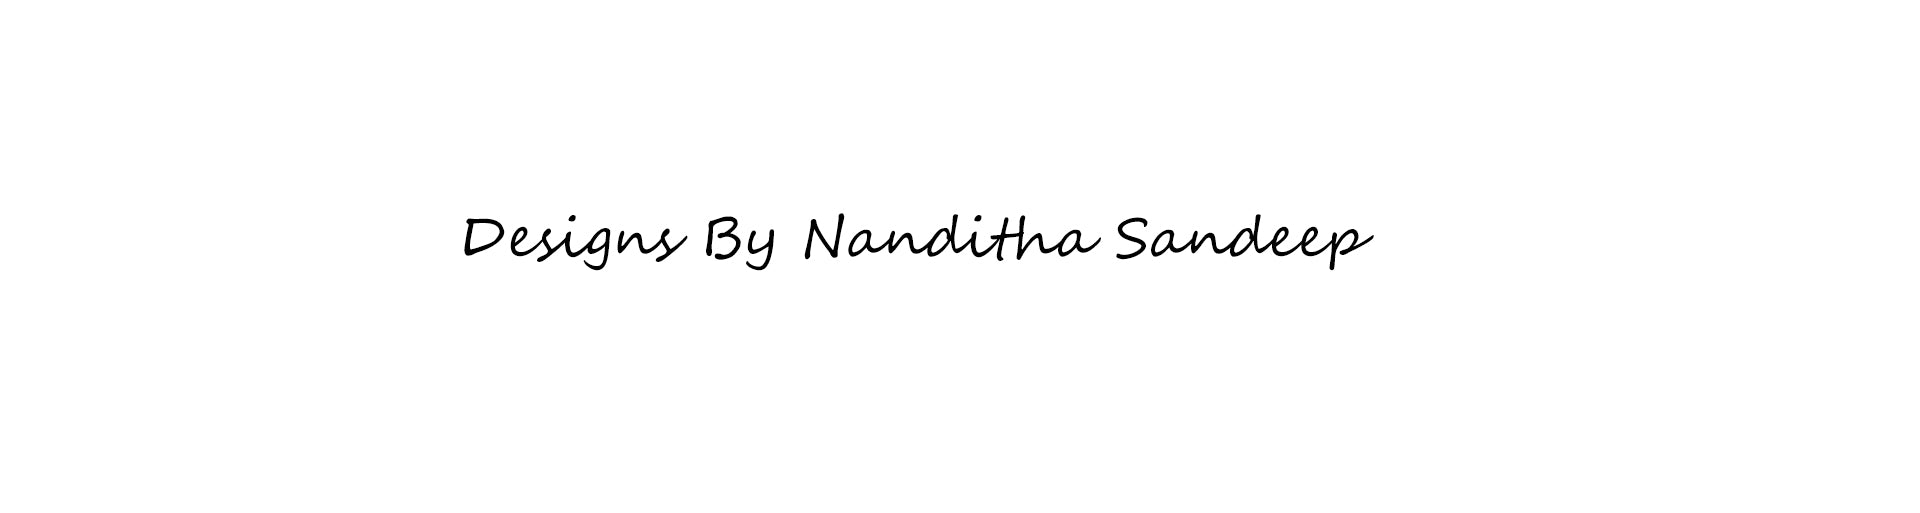 Nanditha Sandeep